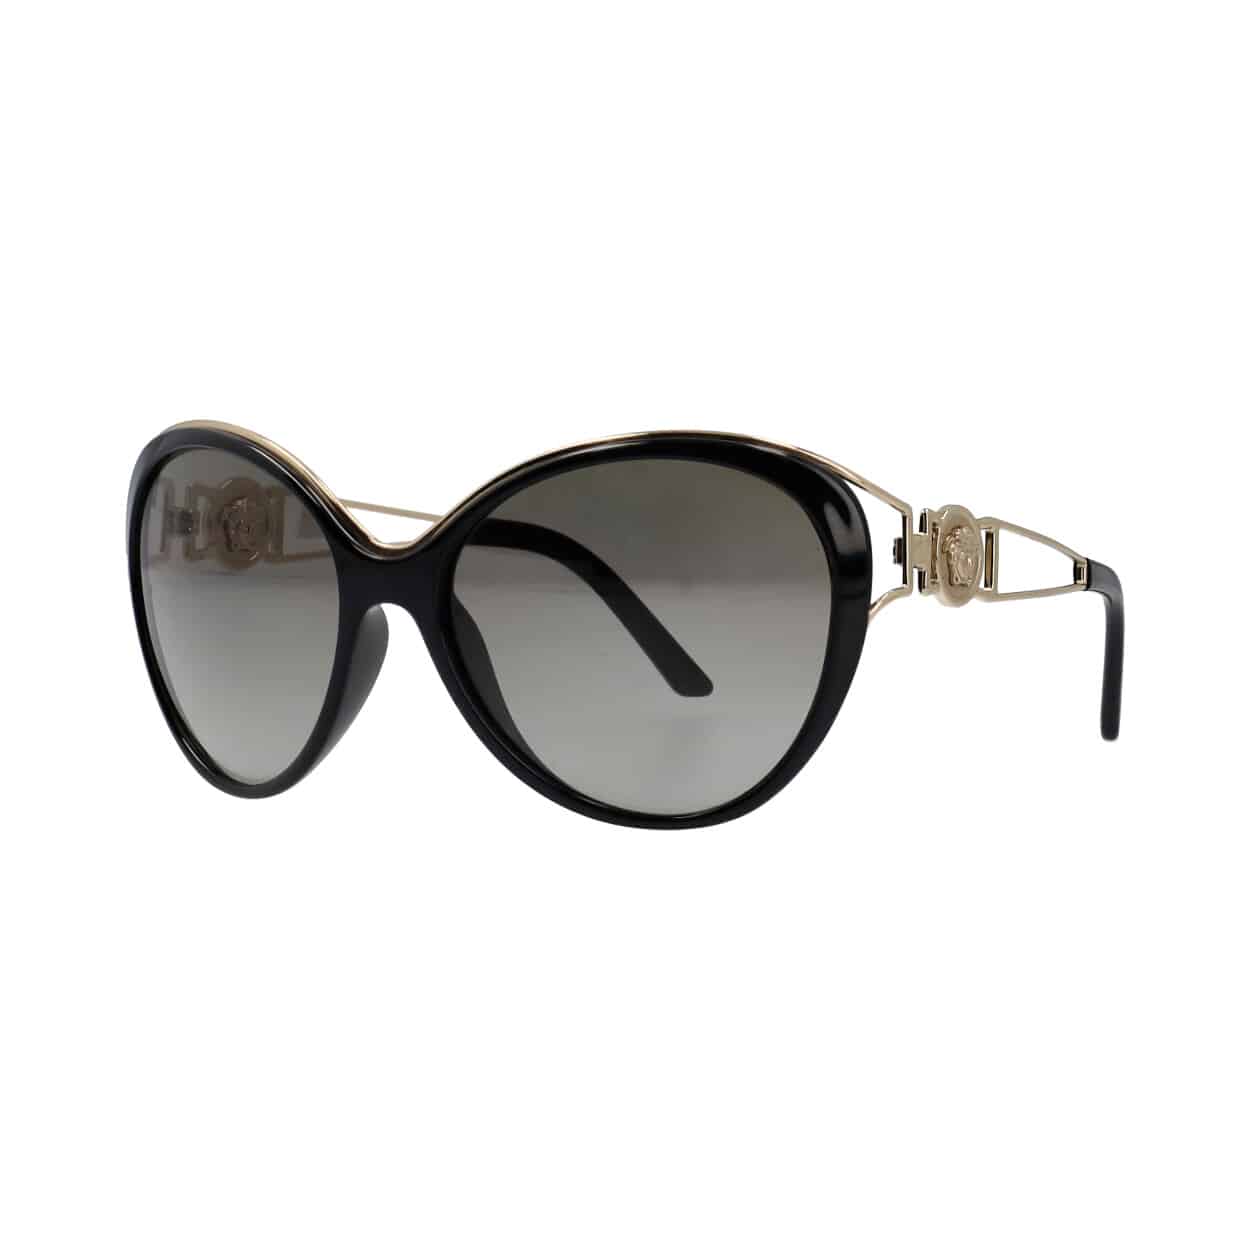 Versace Sunglasses Mod 4233 Black Gold Luxity